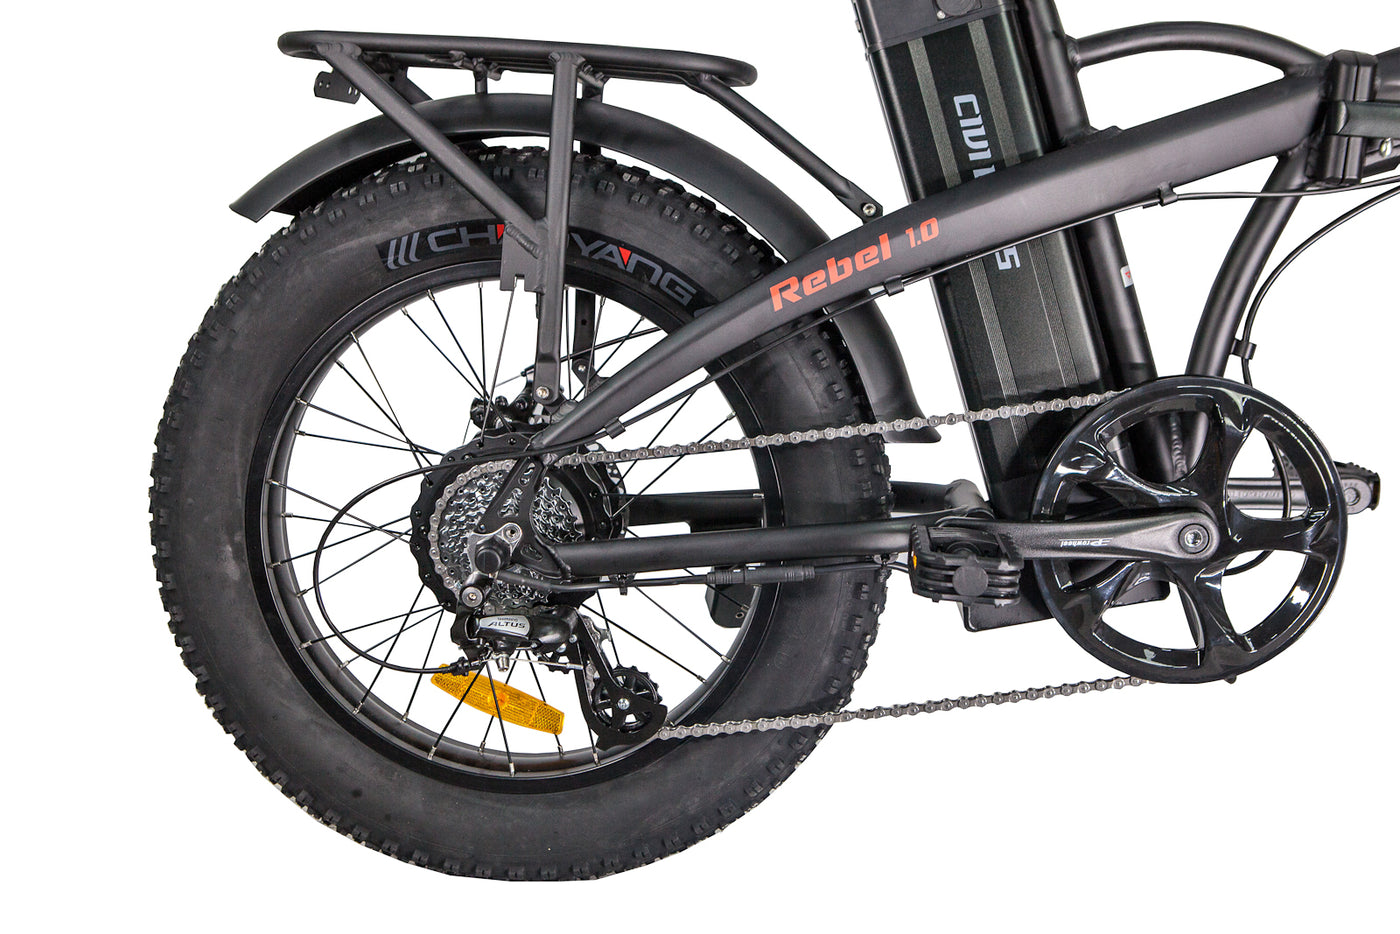 Rebel 1.0 by Civi Bikes. A popular Best Folding E-bike near Long Beach area and Cerritos